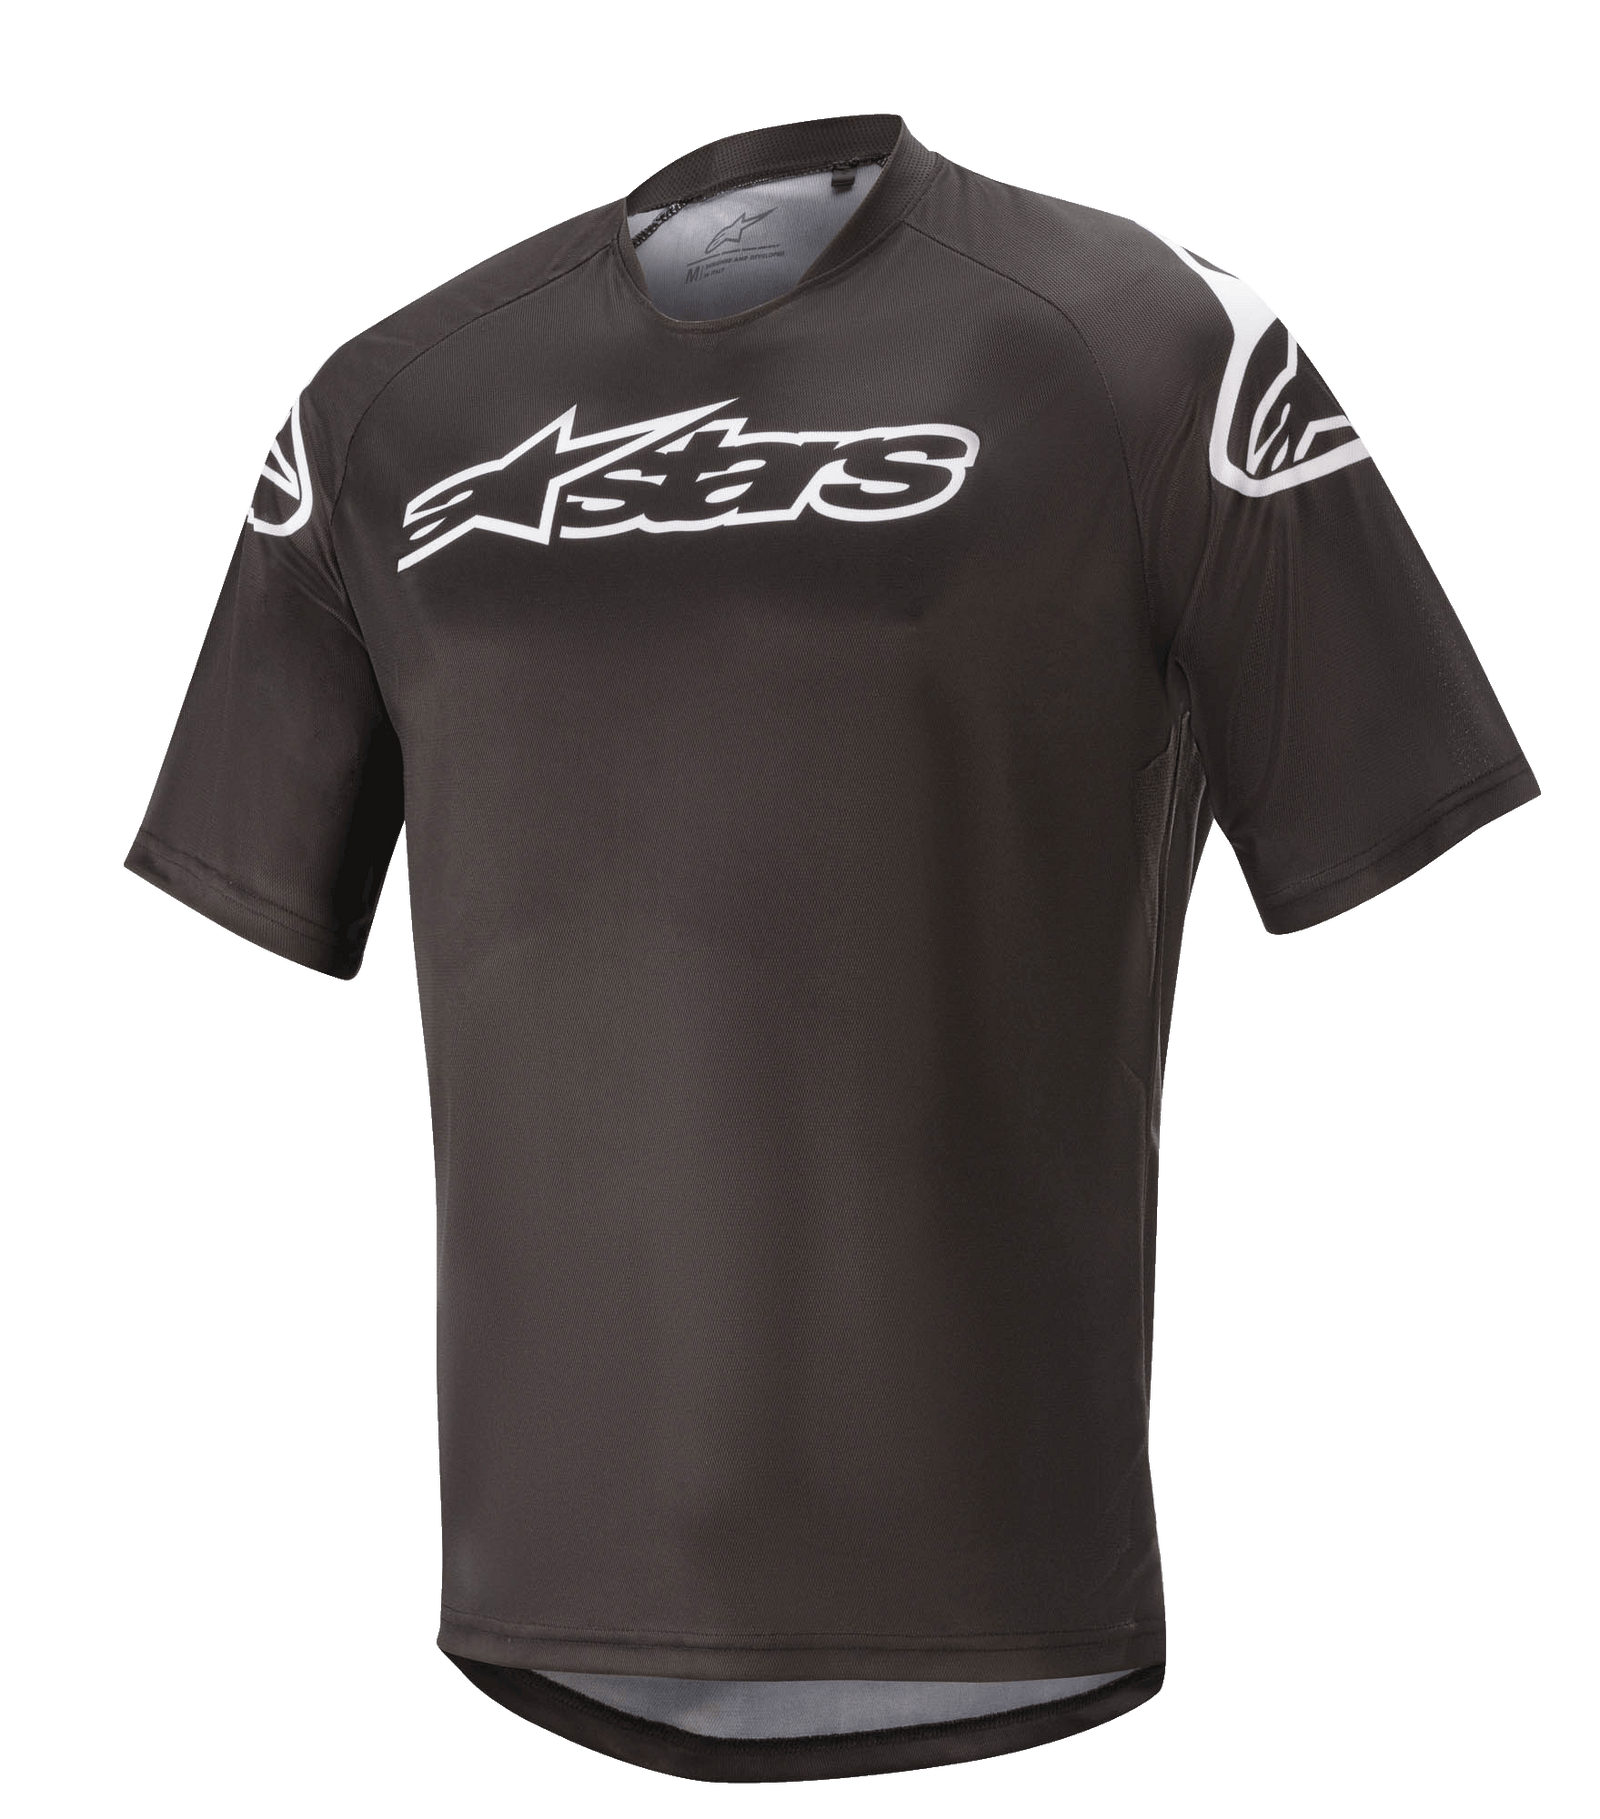 Racer V2 Jersey - Short Sleeve